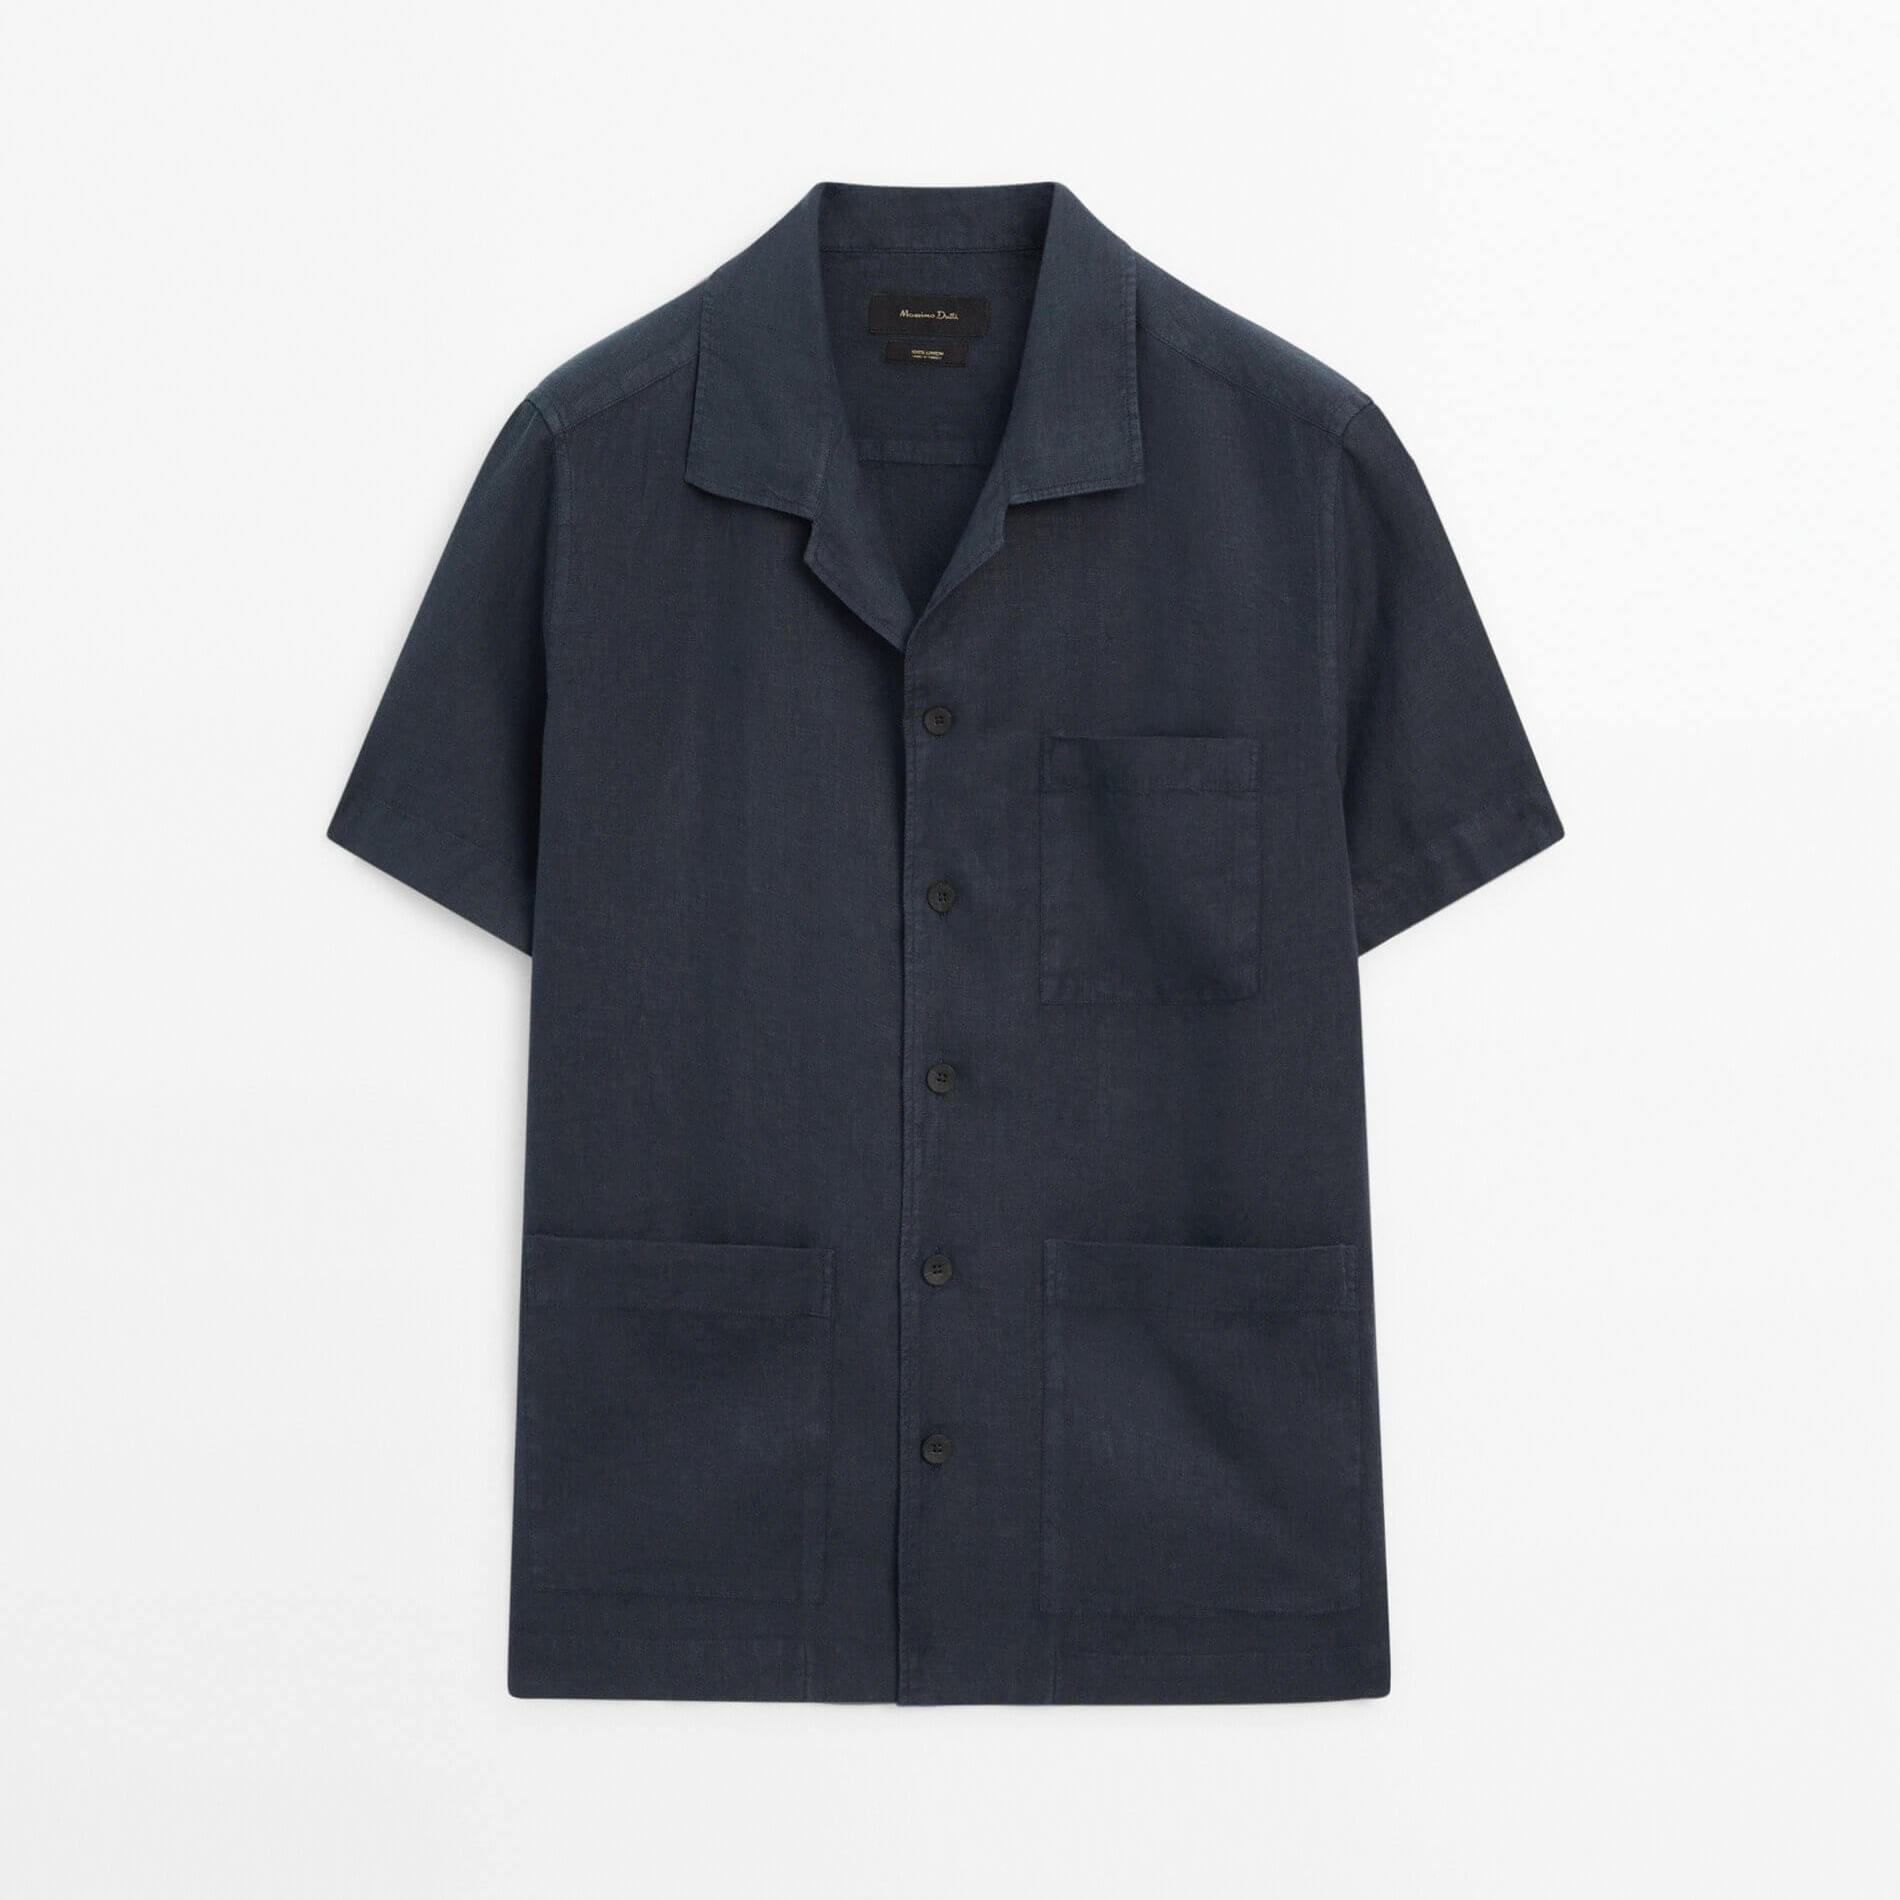 Рубашка Massimo Dutti Short Sleeve Linen With Pockets, темно-синий рубашка massimo dutti suede with chest pockets темно синий